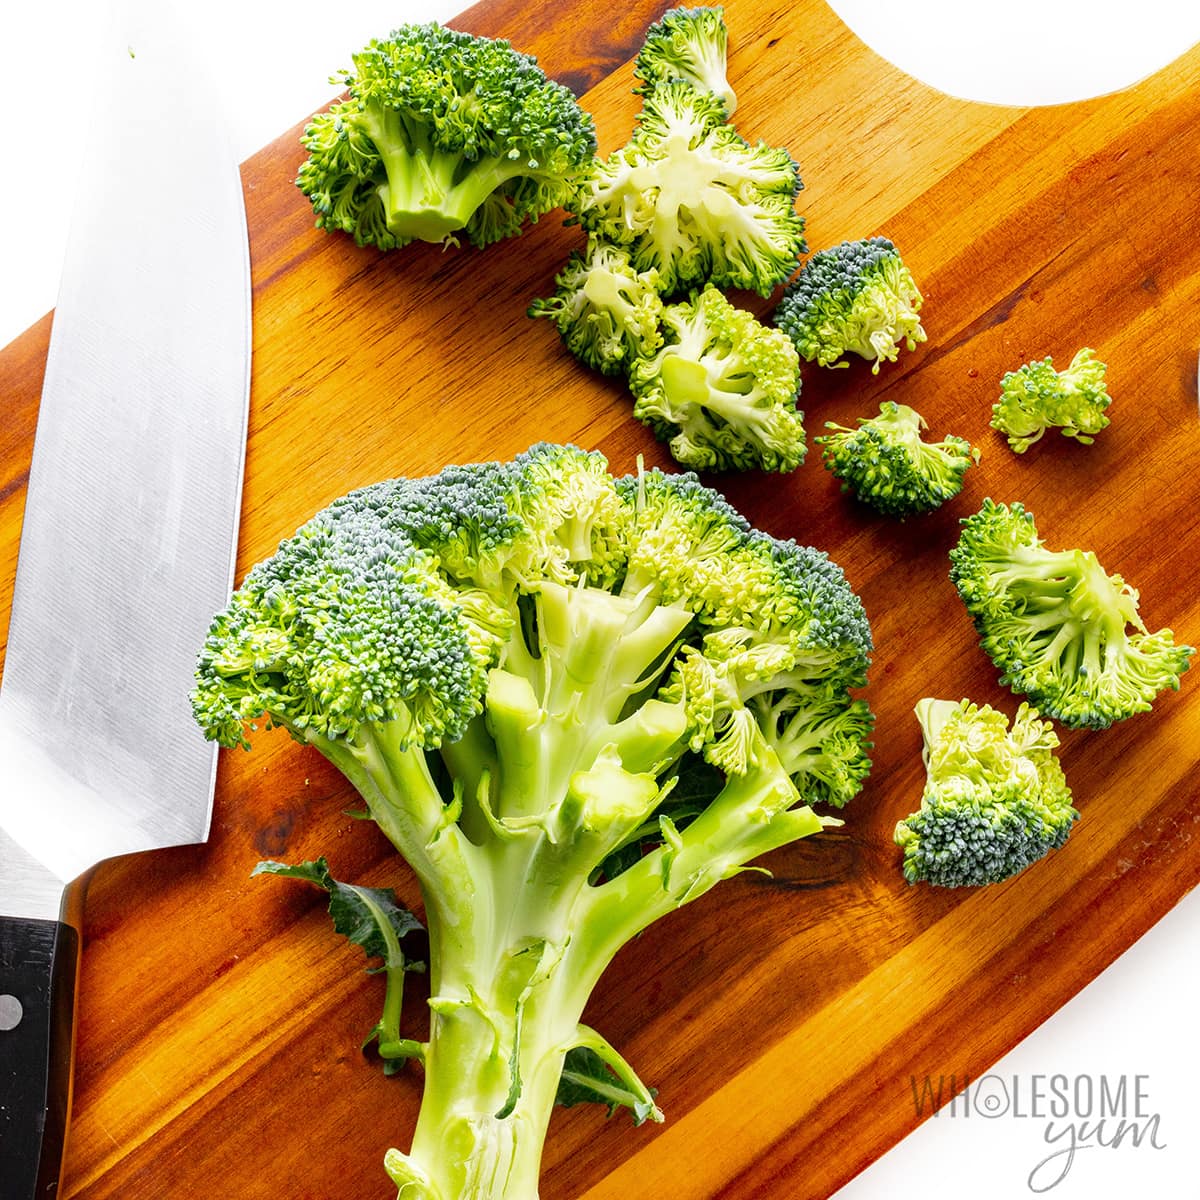 Cutting broccoli florets off the stem.